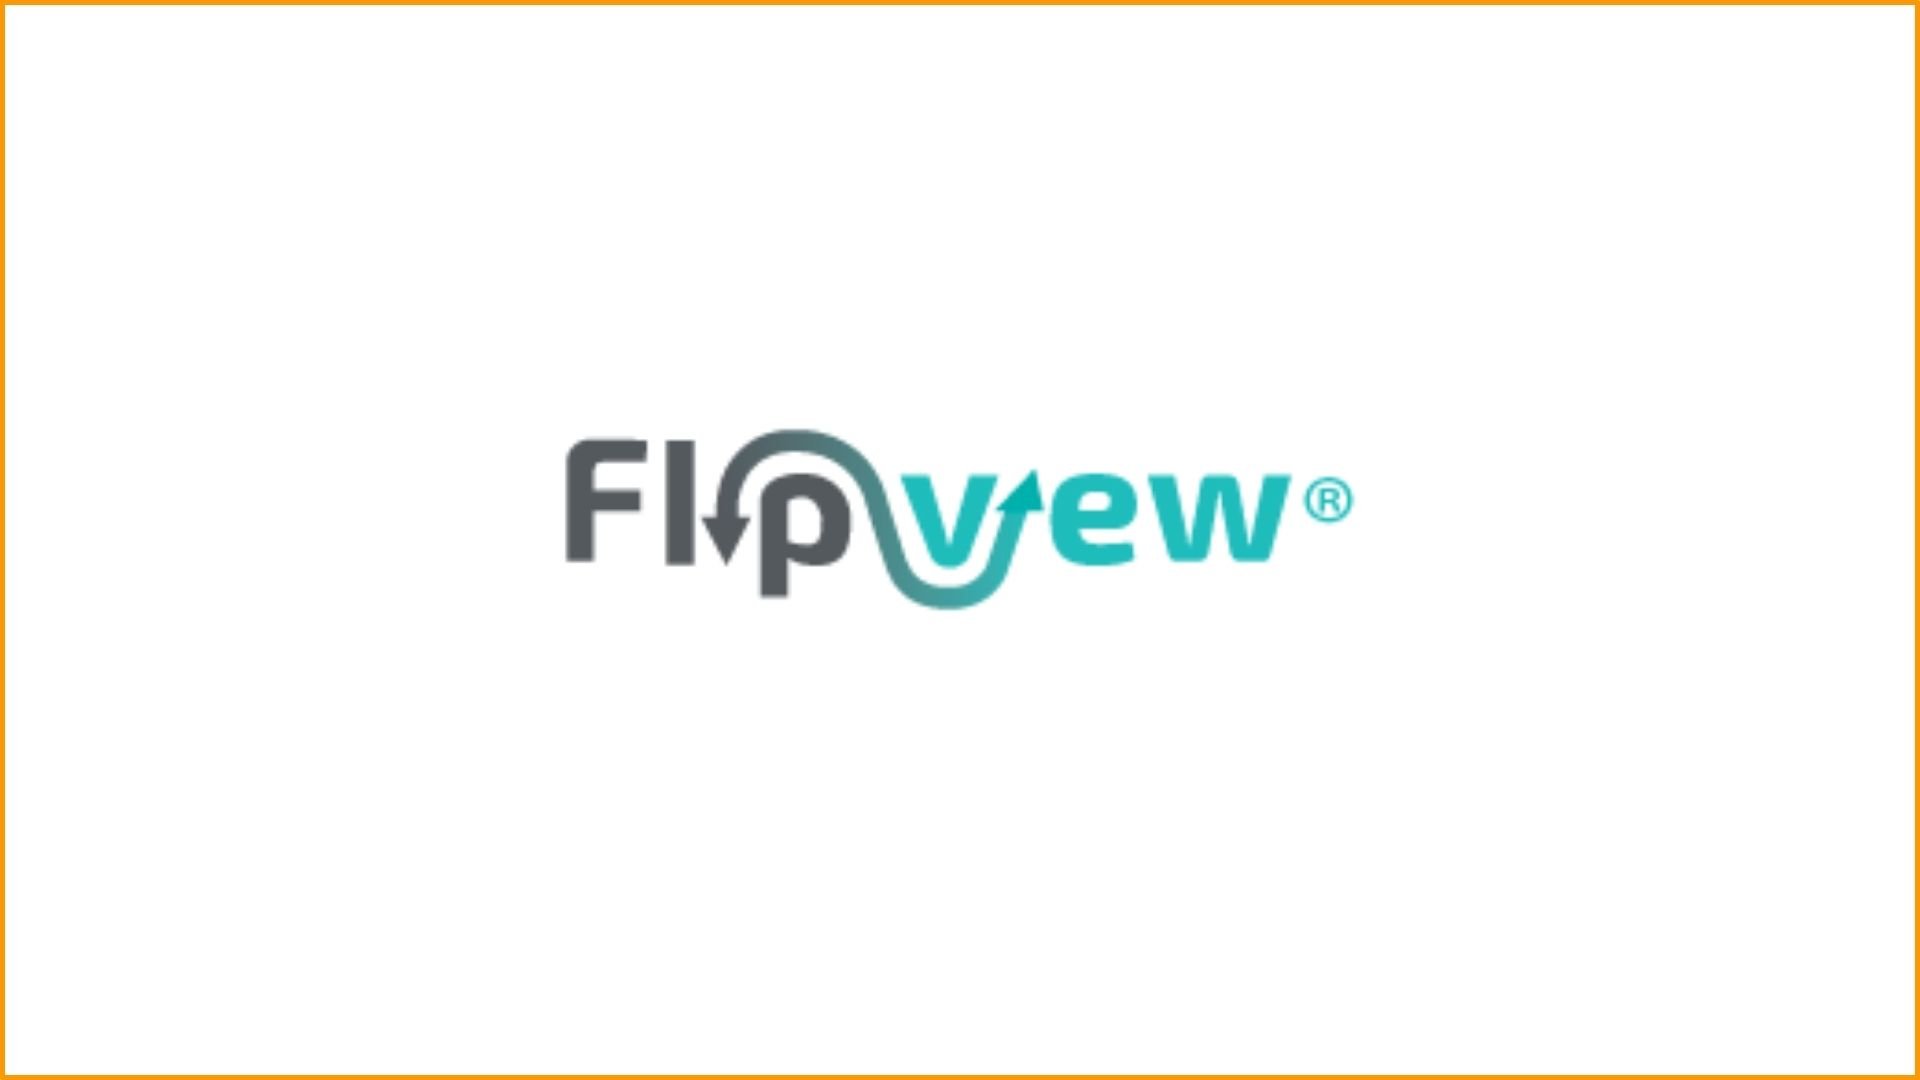 Flipview